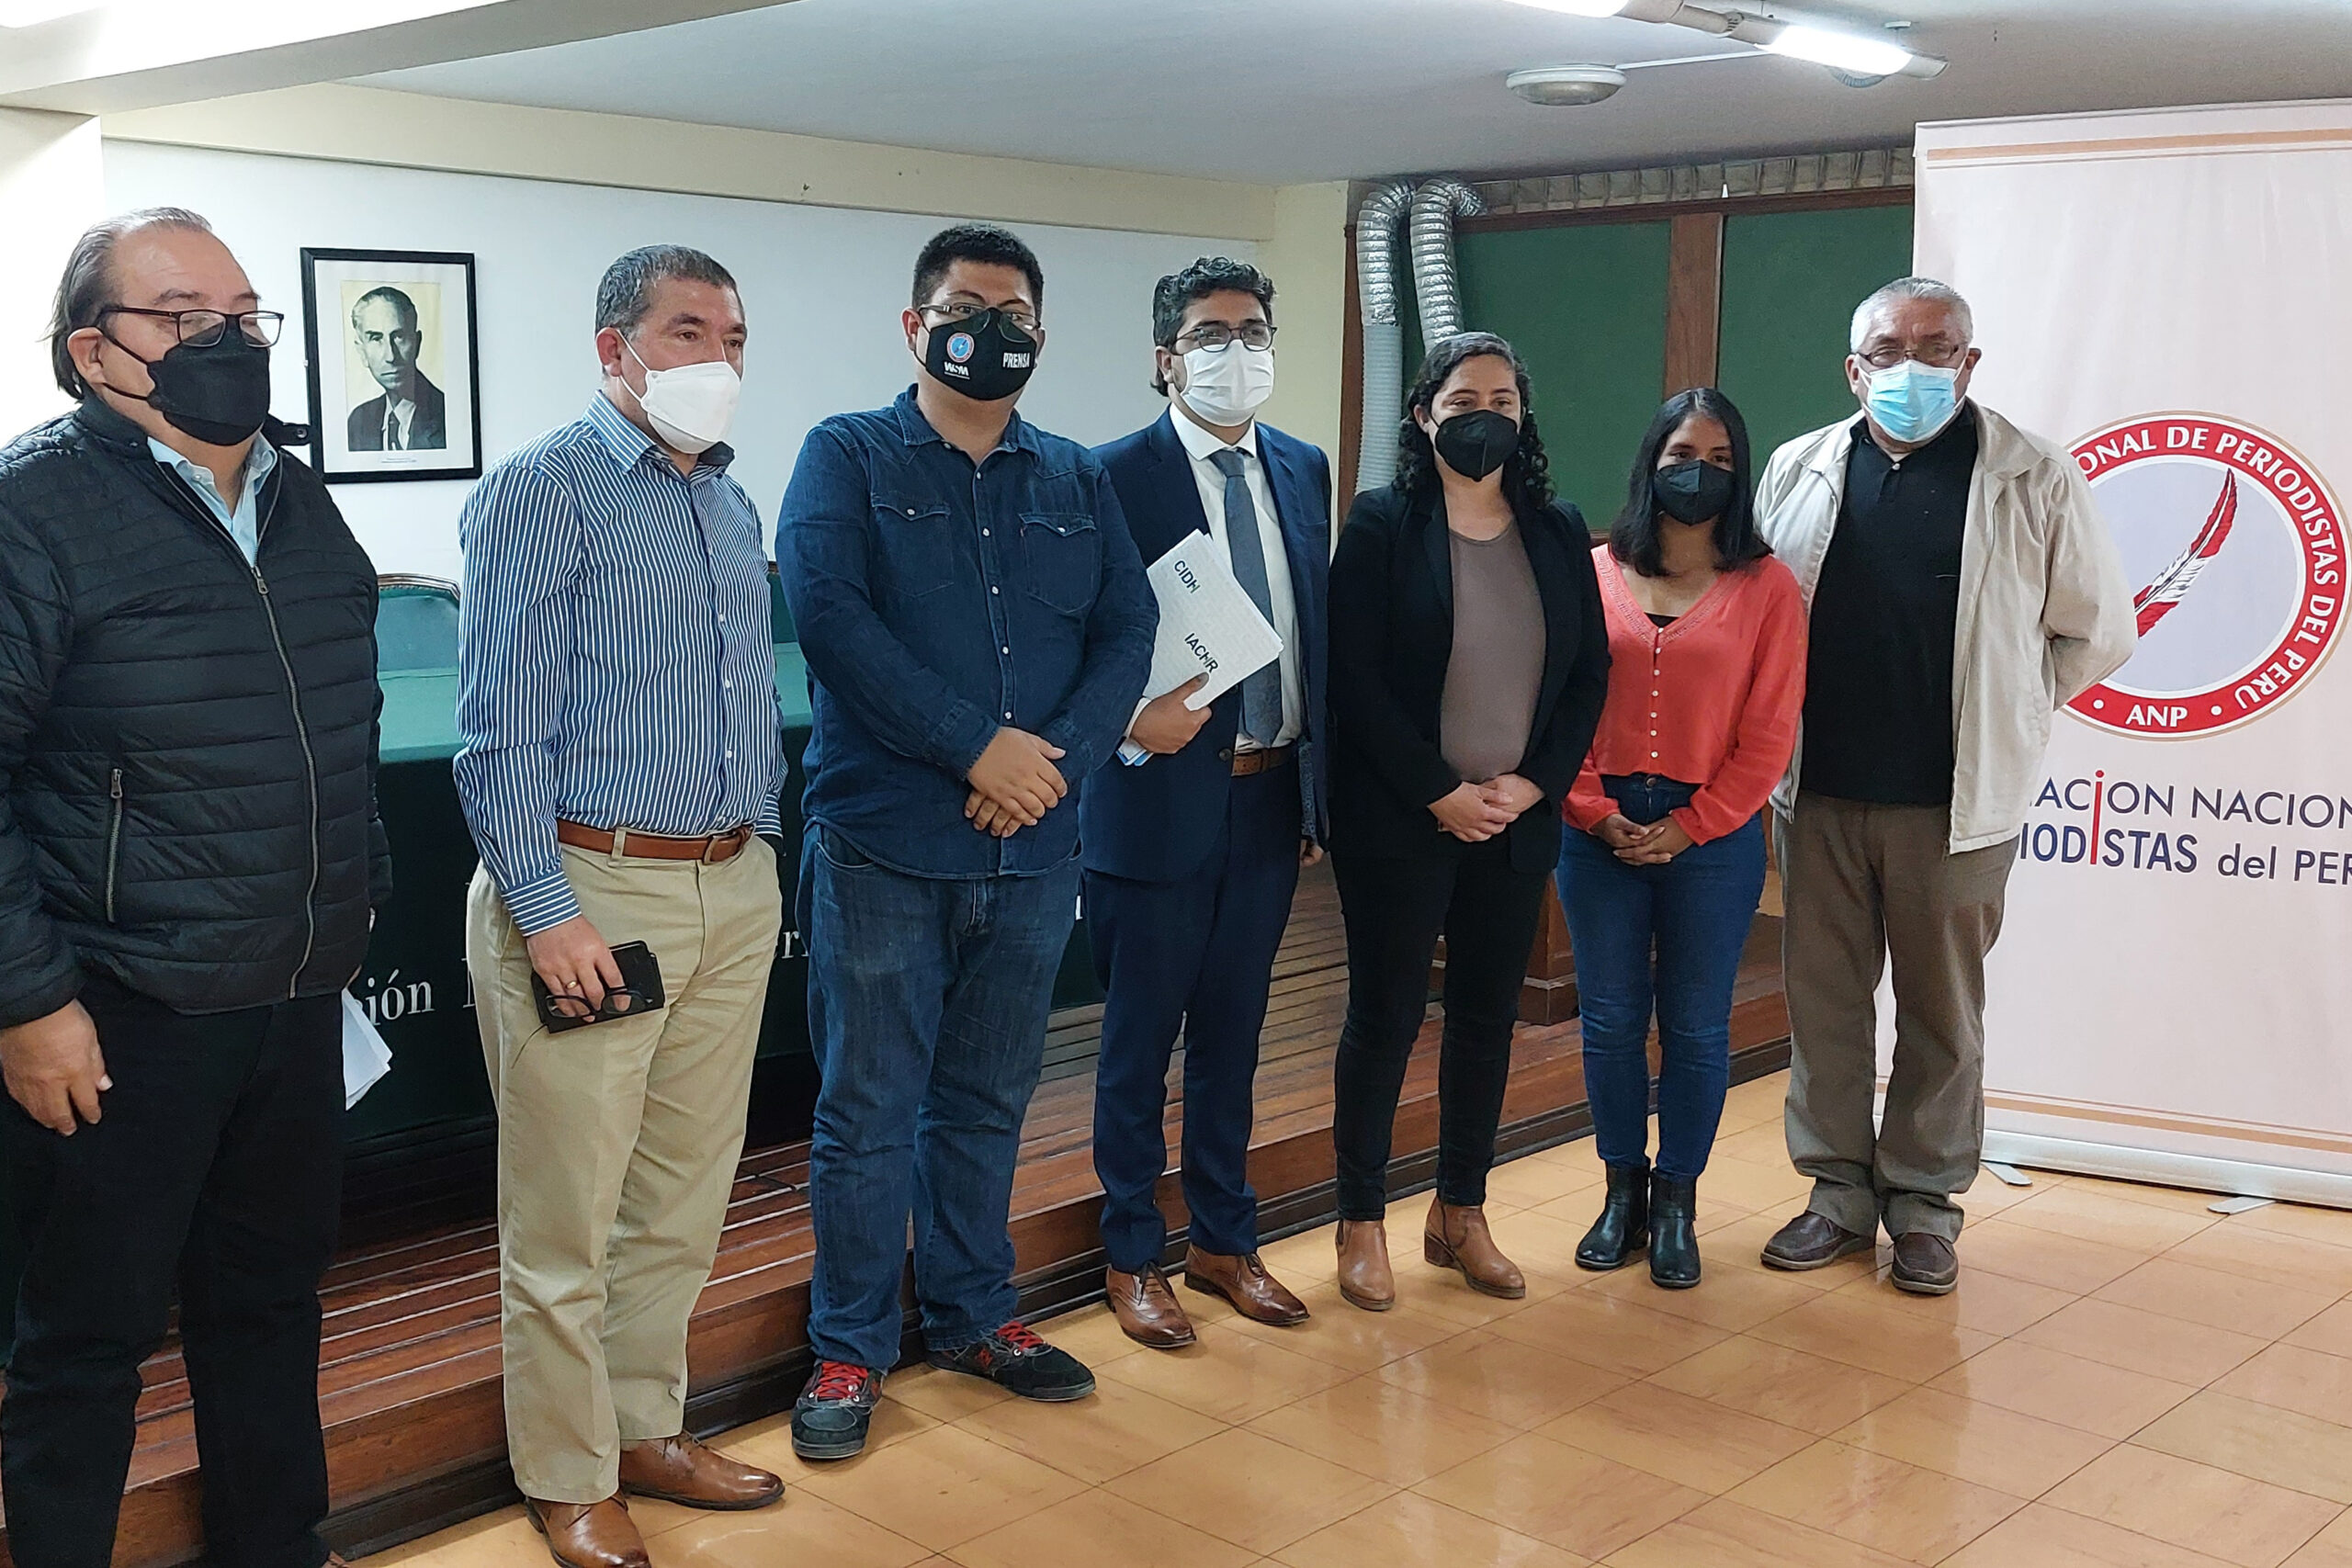 Relator para Libertad de Expresión de CIDH se reunió con la ANP en misión oficial a Perú